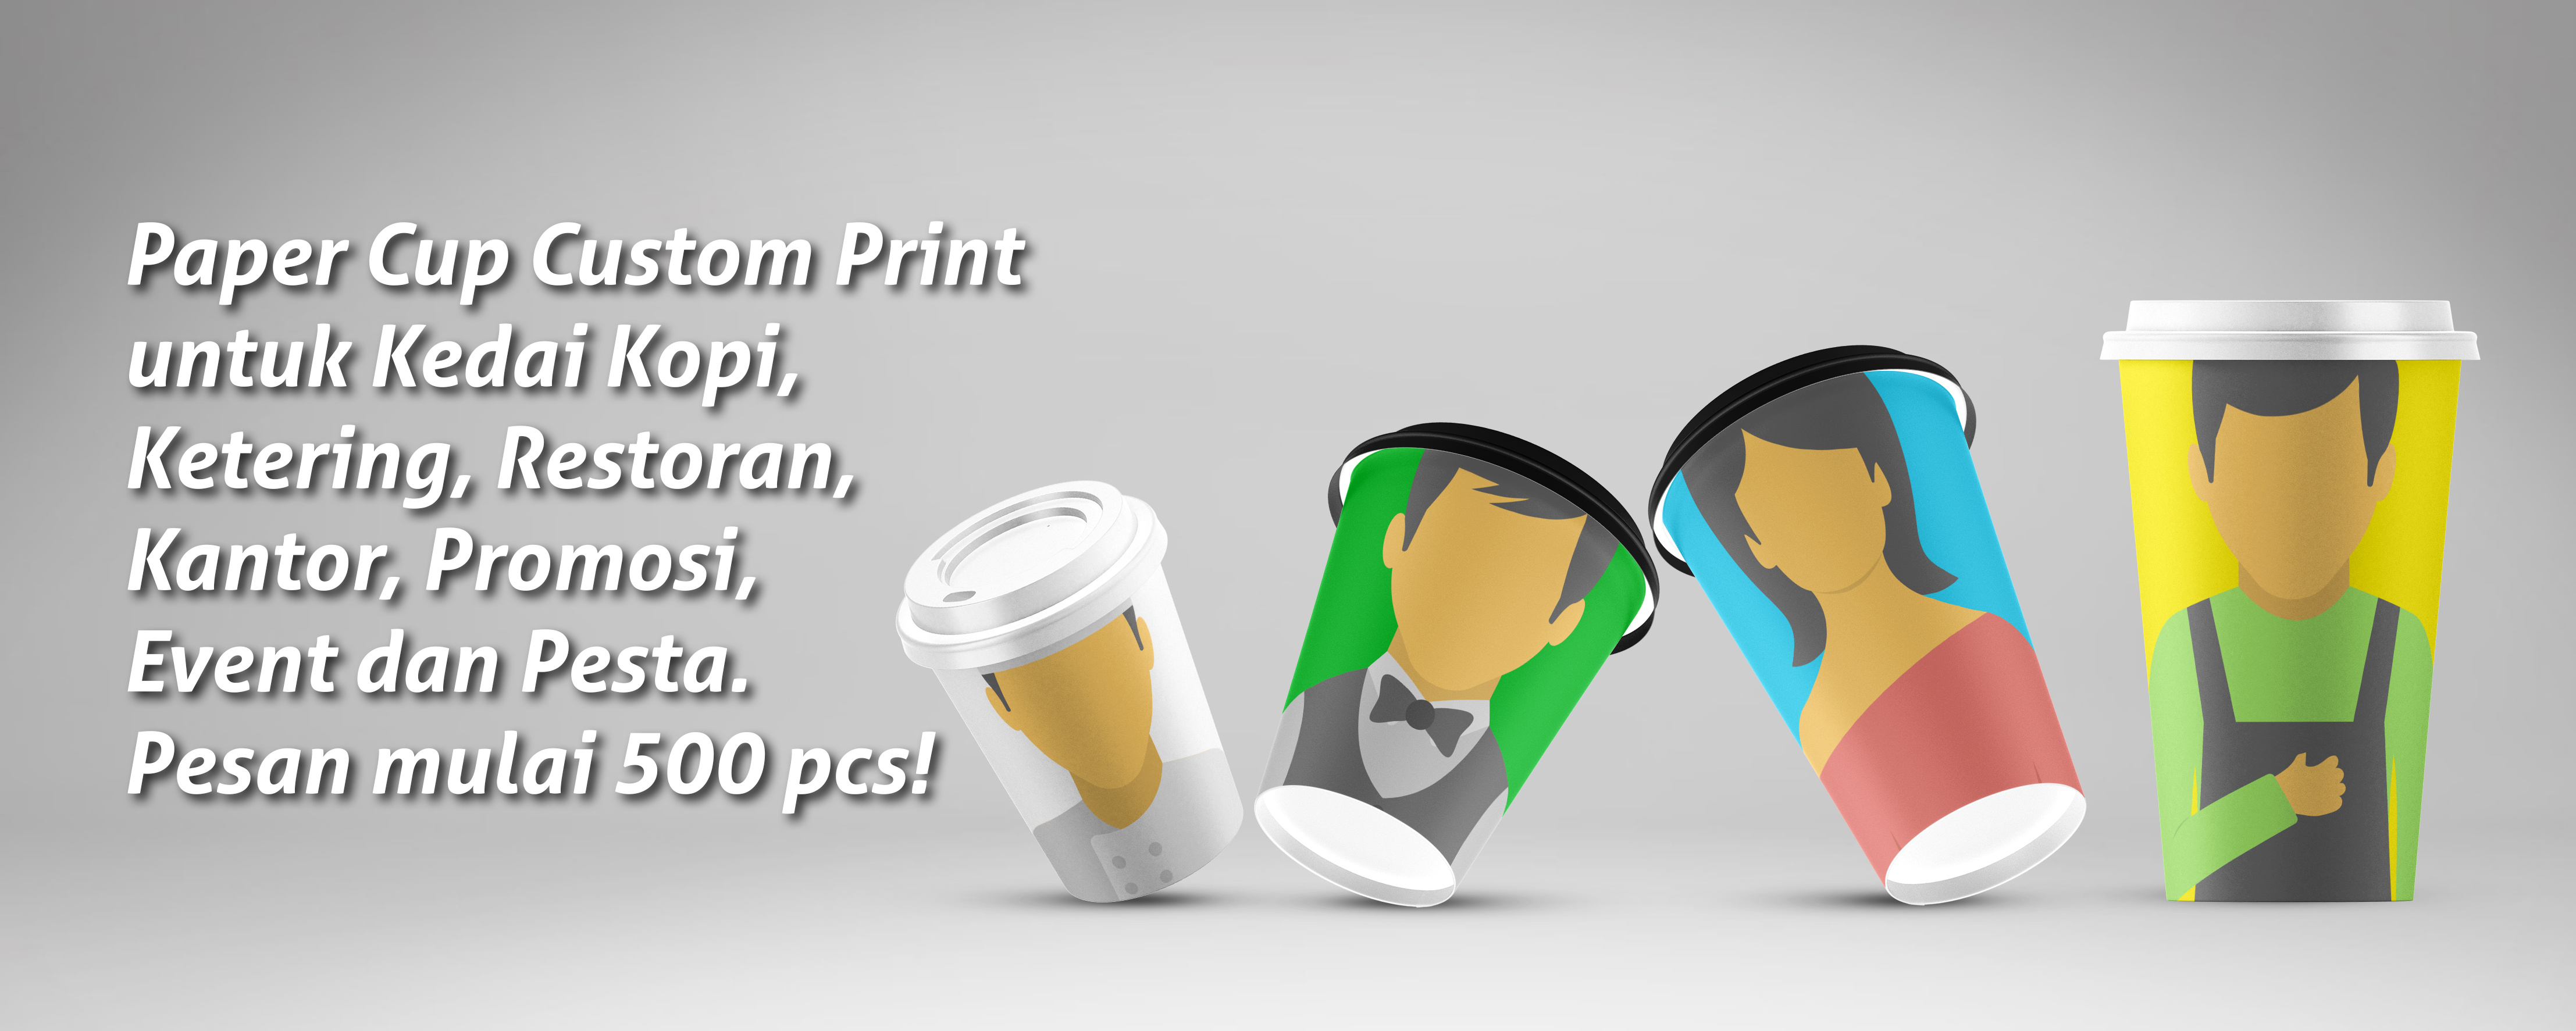 Custom Printed Paper Cup